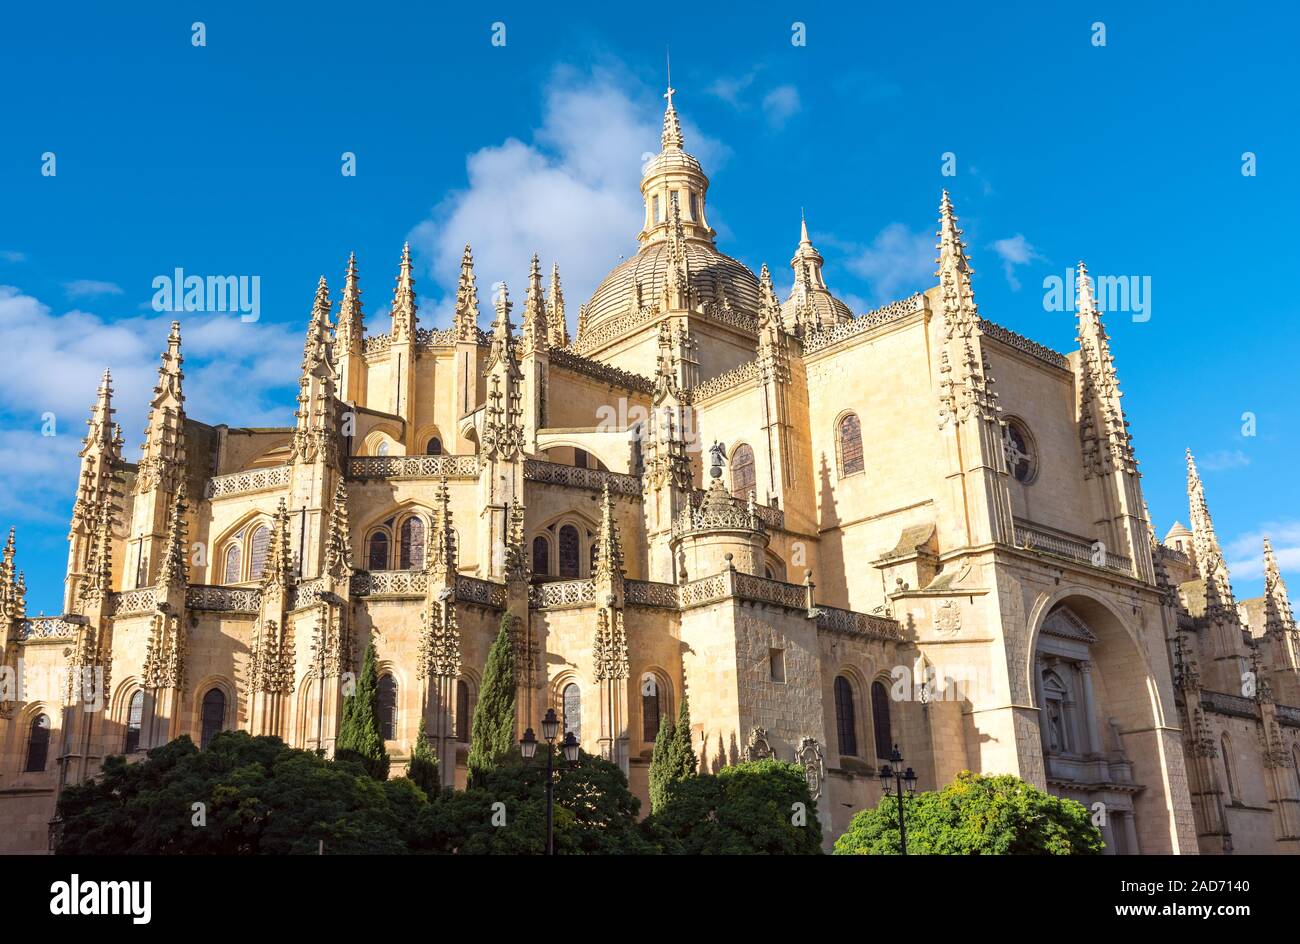 Die imposante Kathedrale von Segovia in Spanien Stockfoto